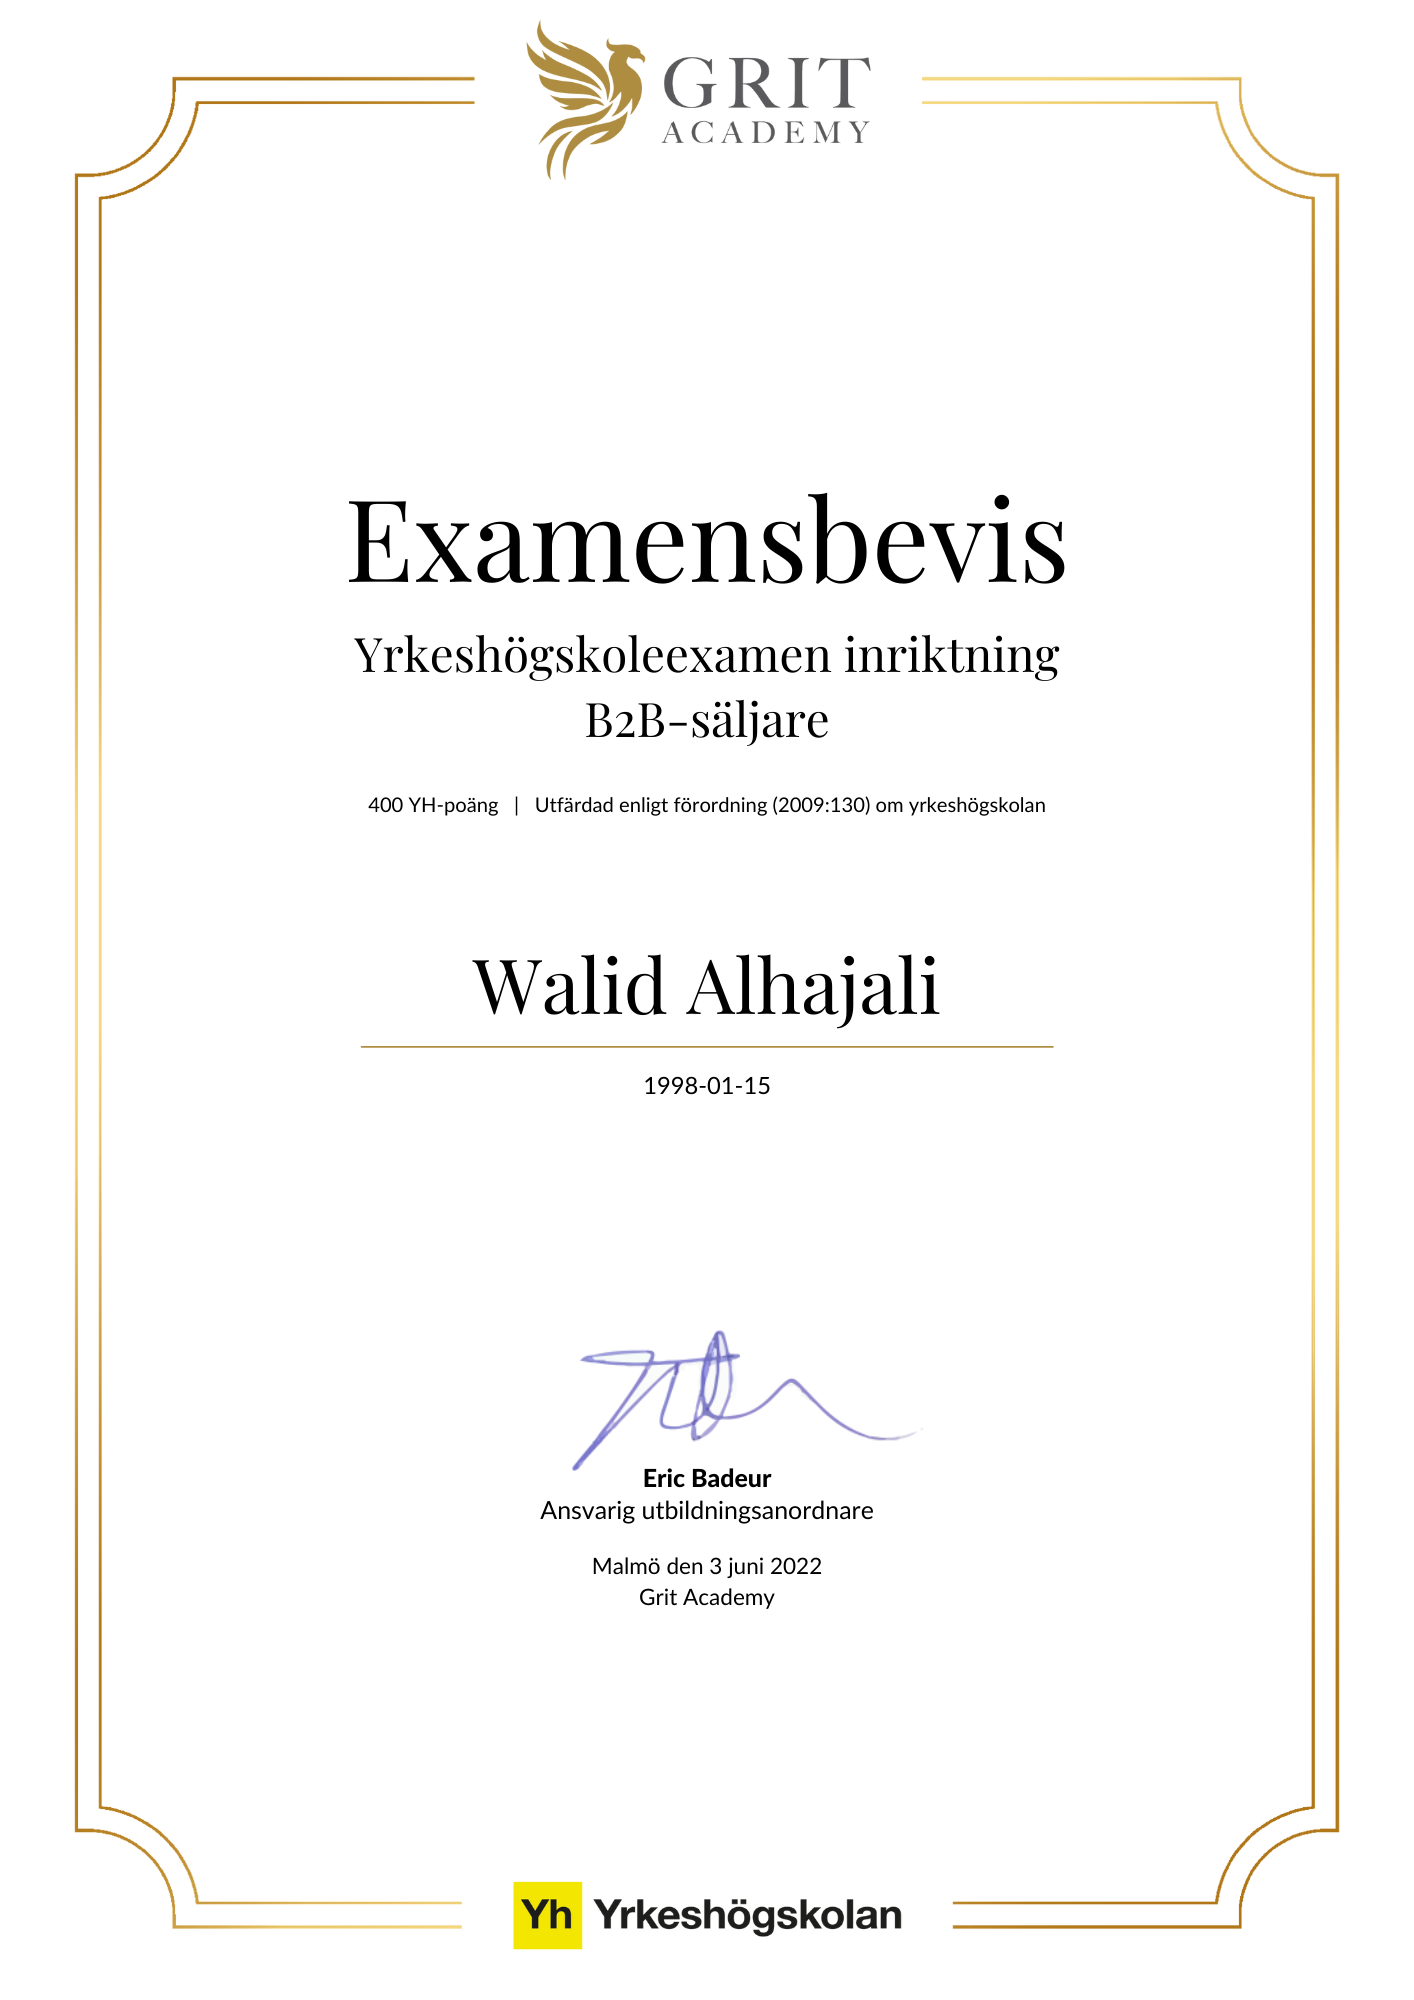 Examensbevis Walid Alhajali - 1